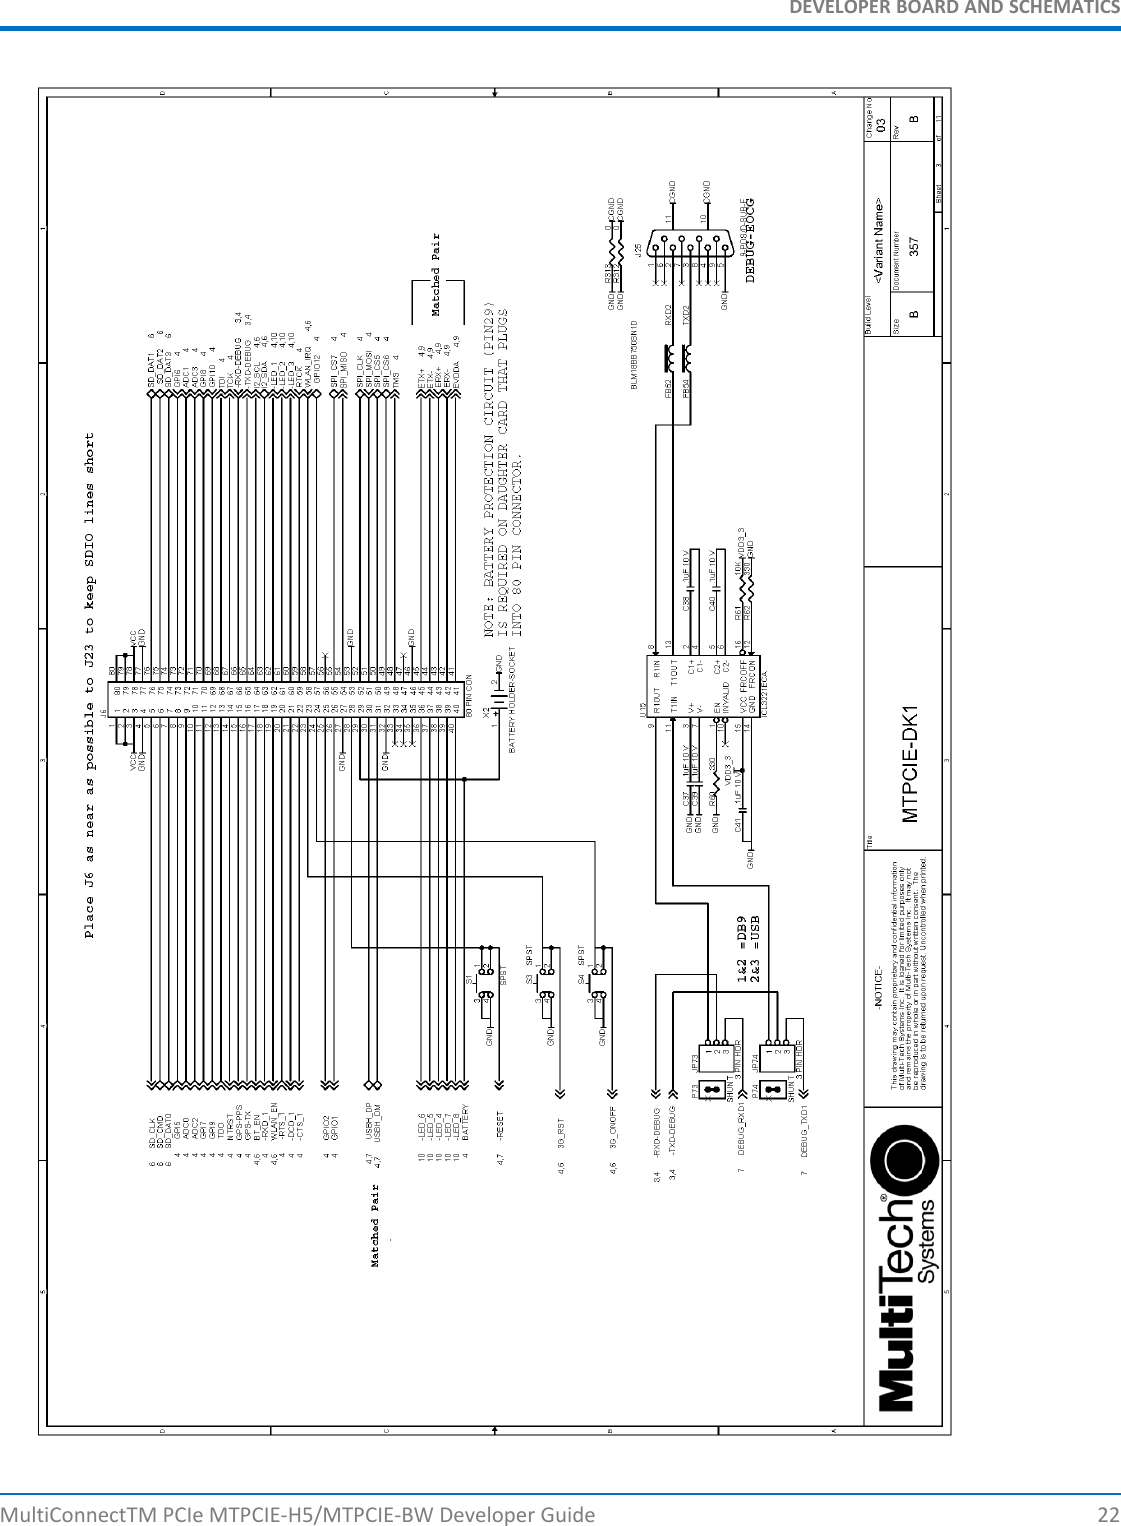 DEVELOPER BOARD AND SCHEMATICSMultiConnectTM PCIe MTPCIE-H5/MTPCIE-BW Developer Guide 22